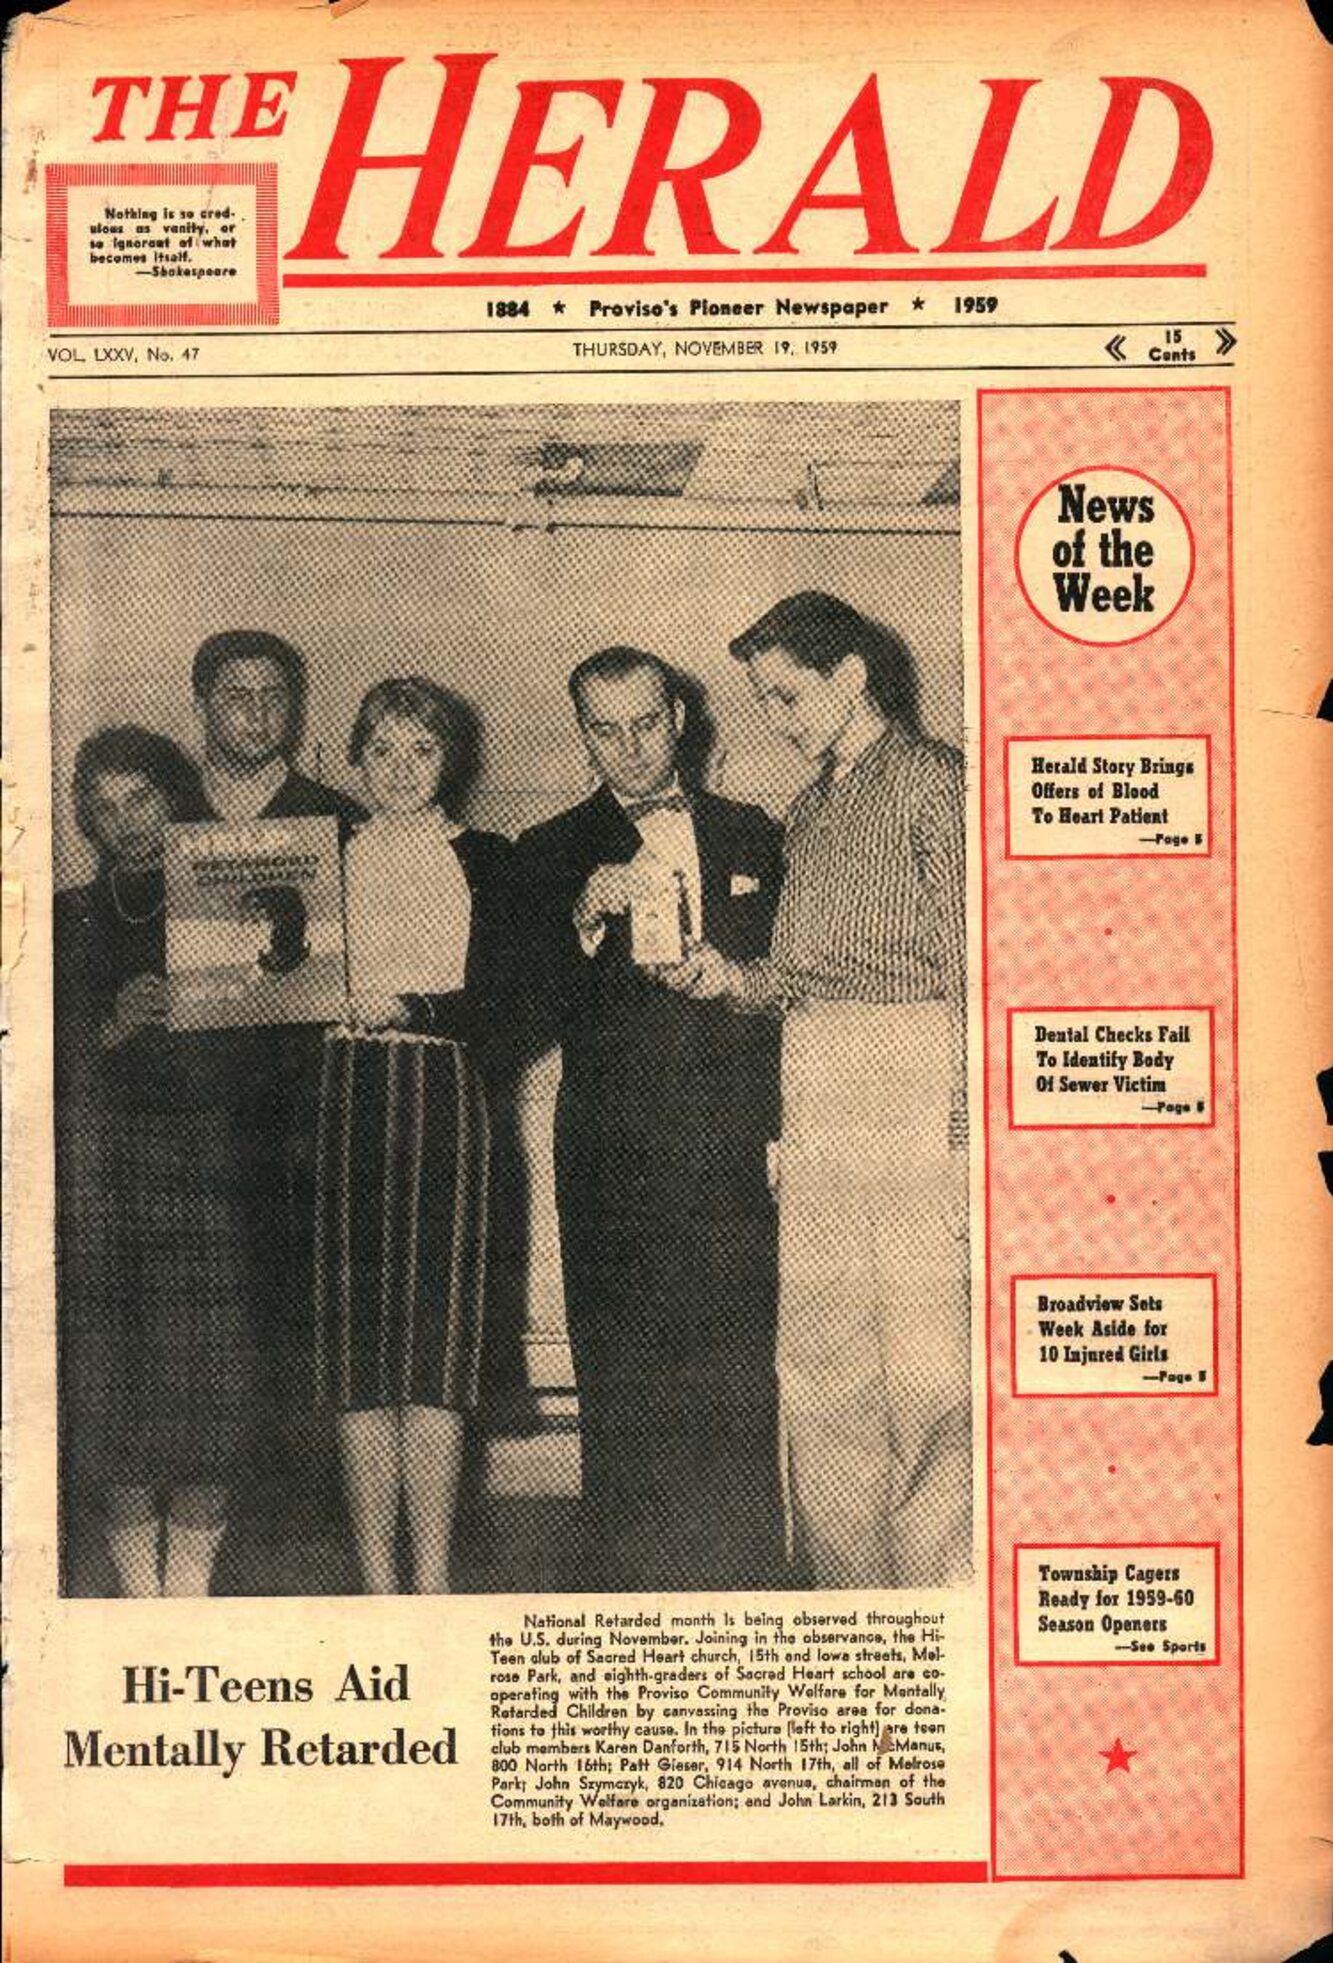 The Herald – 19591119